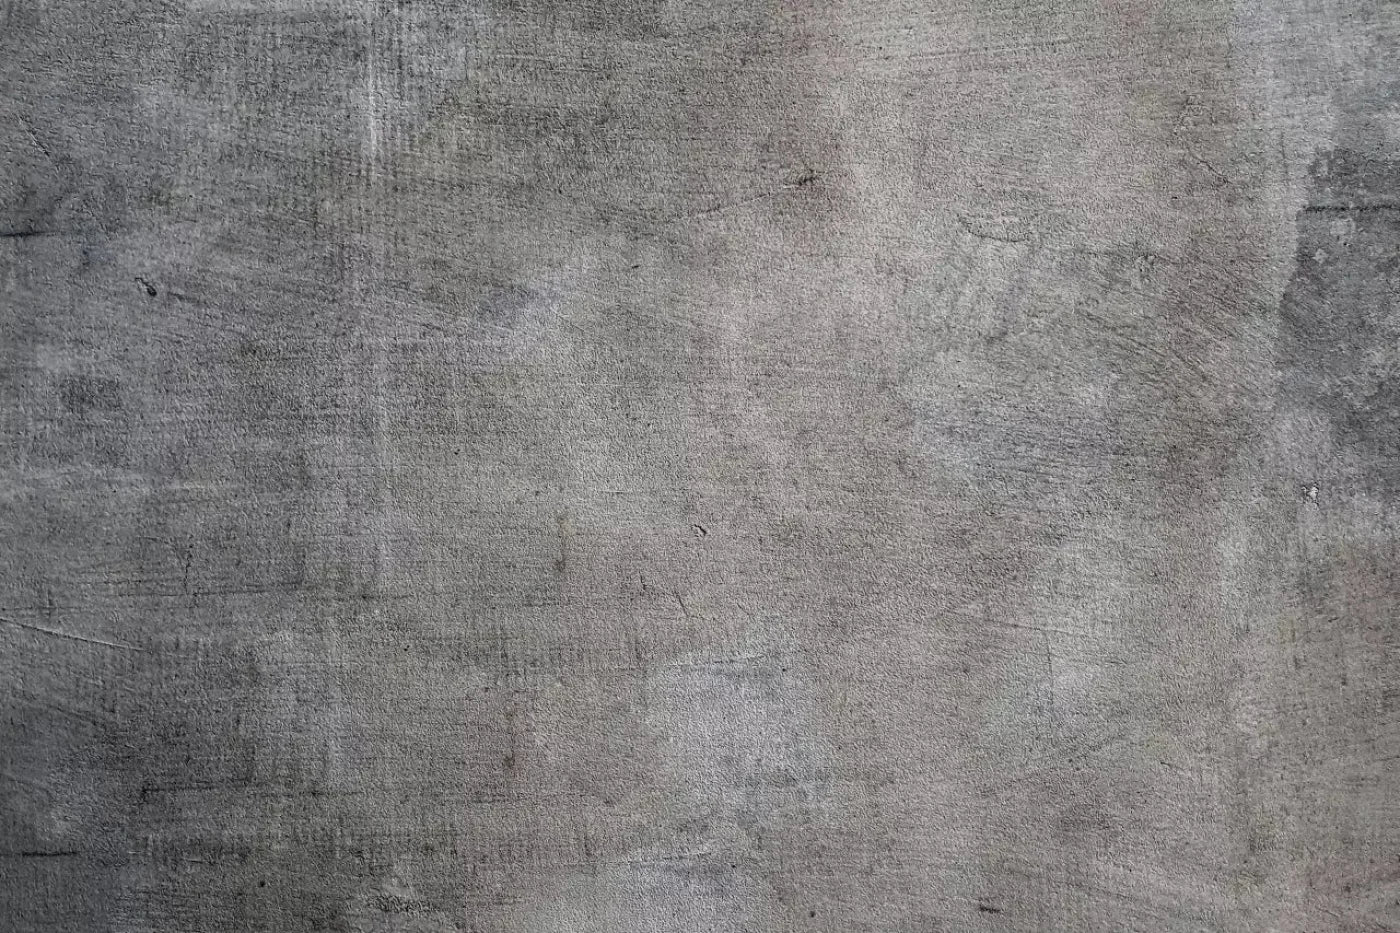 Concrete Dark 5X4 Rubbermat Floor ( 60 X 48 Inch ) Backdrop